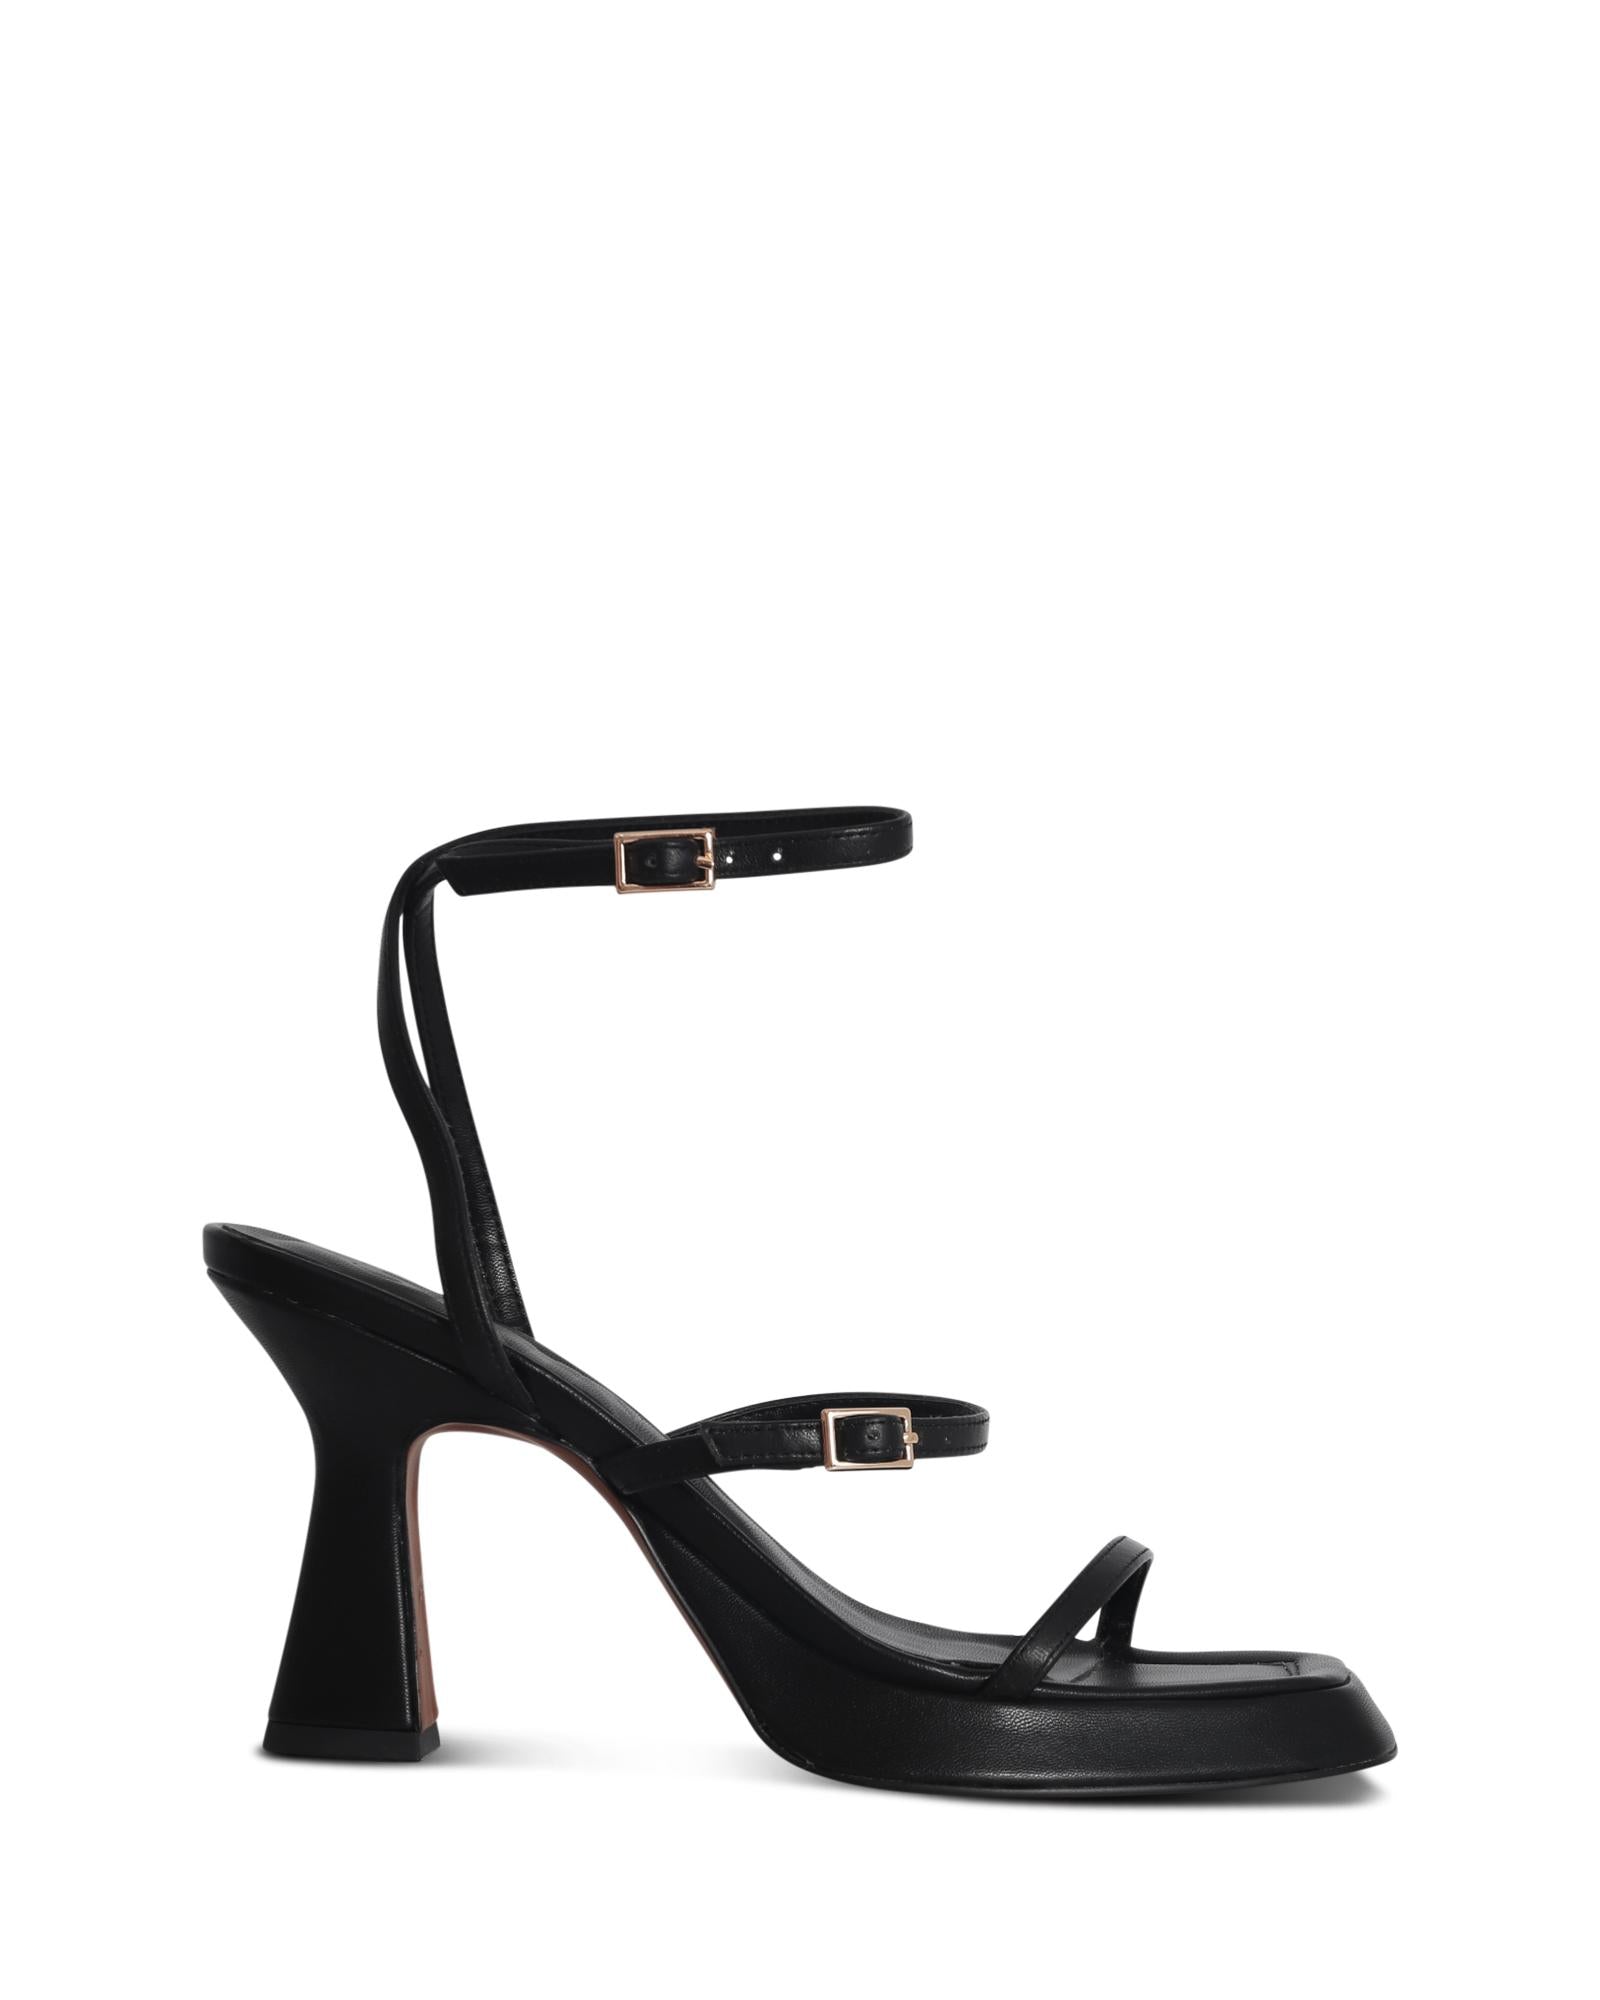 Salerno Black 9cm Platform Block Heel with Delicate Straps and Gold Buckles 